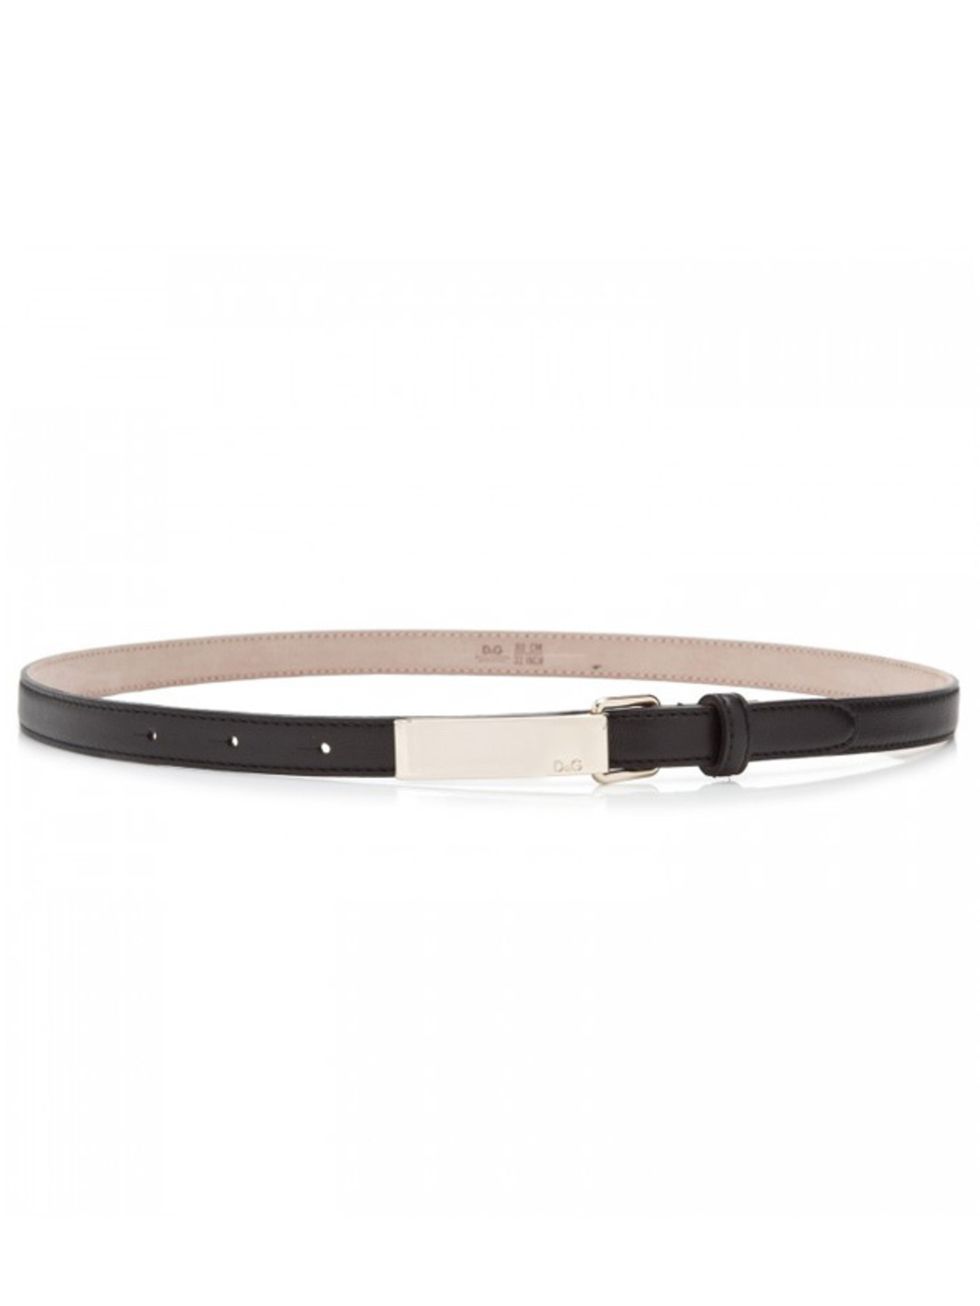 <p>D&amp;G skinny plaque belt, £105, at <a href="http://www.harveynichols.com/womens/categories/designer-accessories/belts/s354747-skinny-plaque-belt.html?colour=BLACK">Harvey Nichols</a></p>